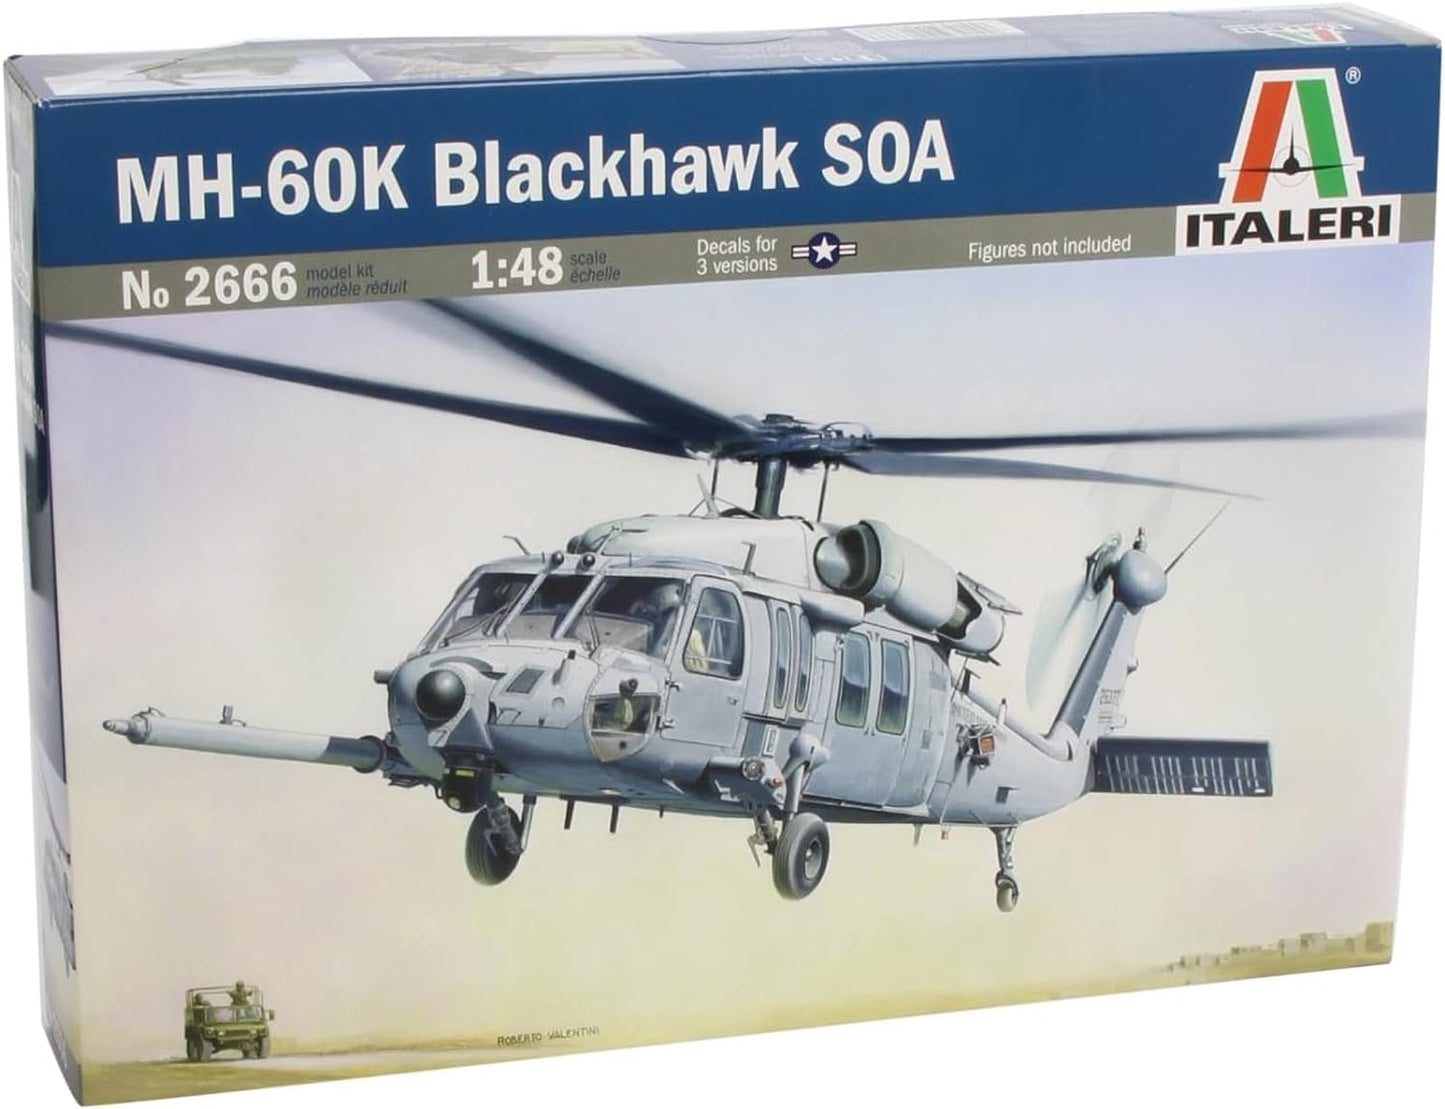 MH-60K Blackhawk SOA